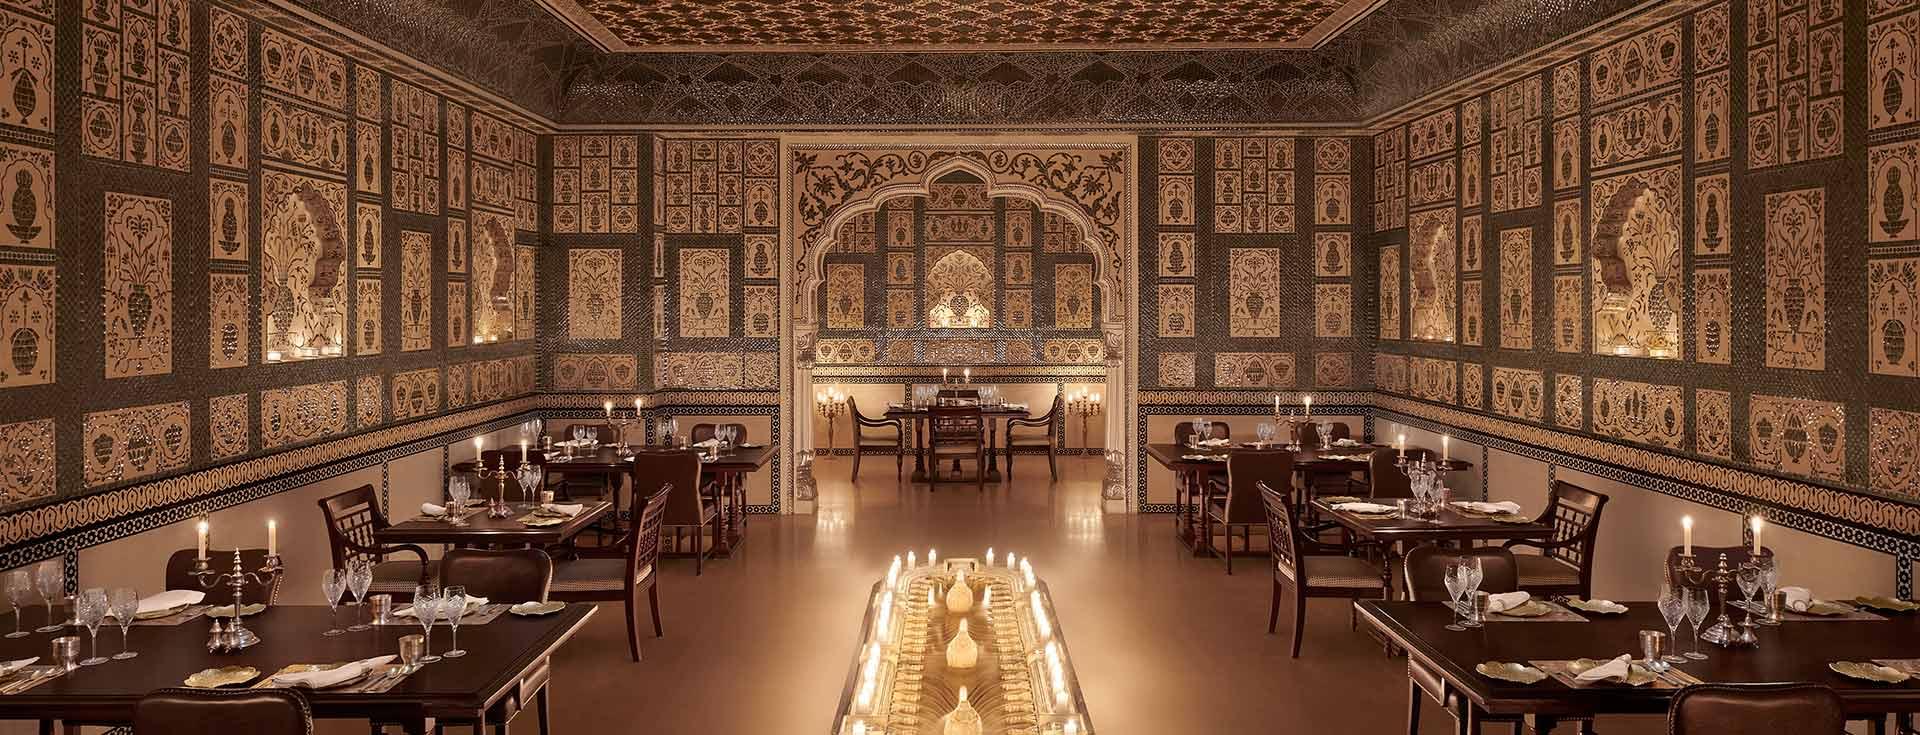 Mohan Mahal - Indian Speciality Restaurant - Leela Palace Jaipur